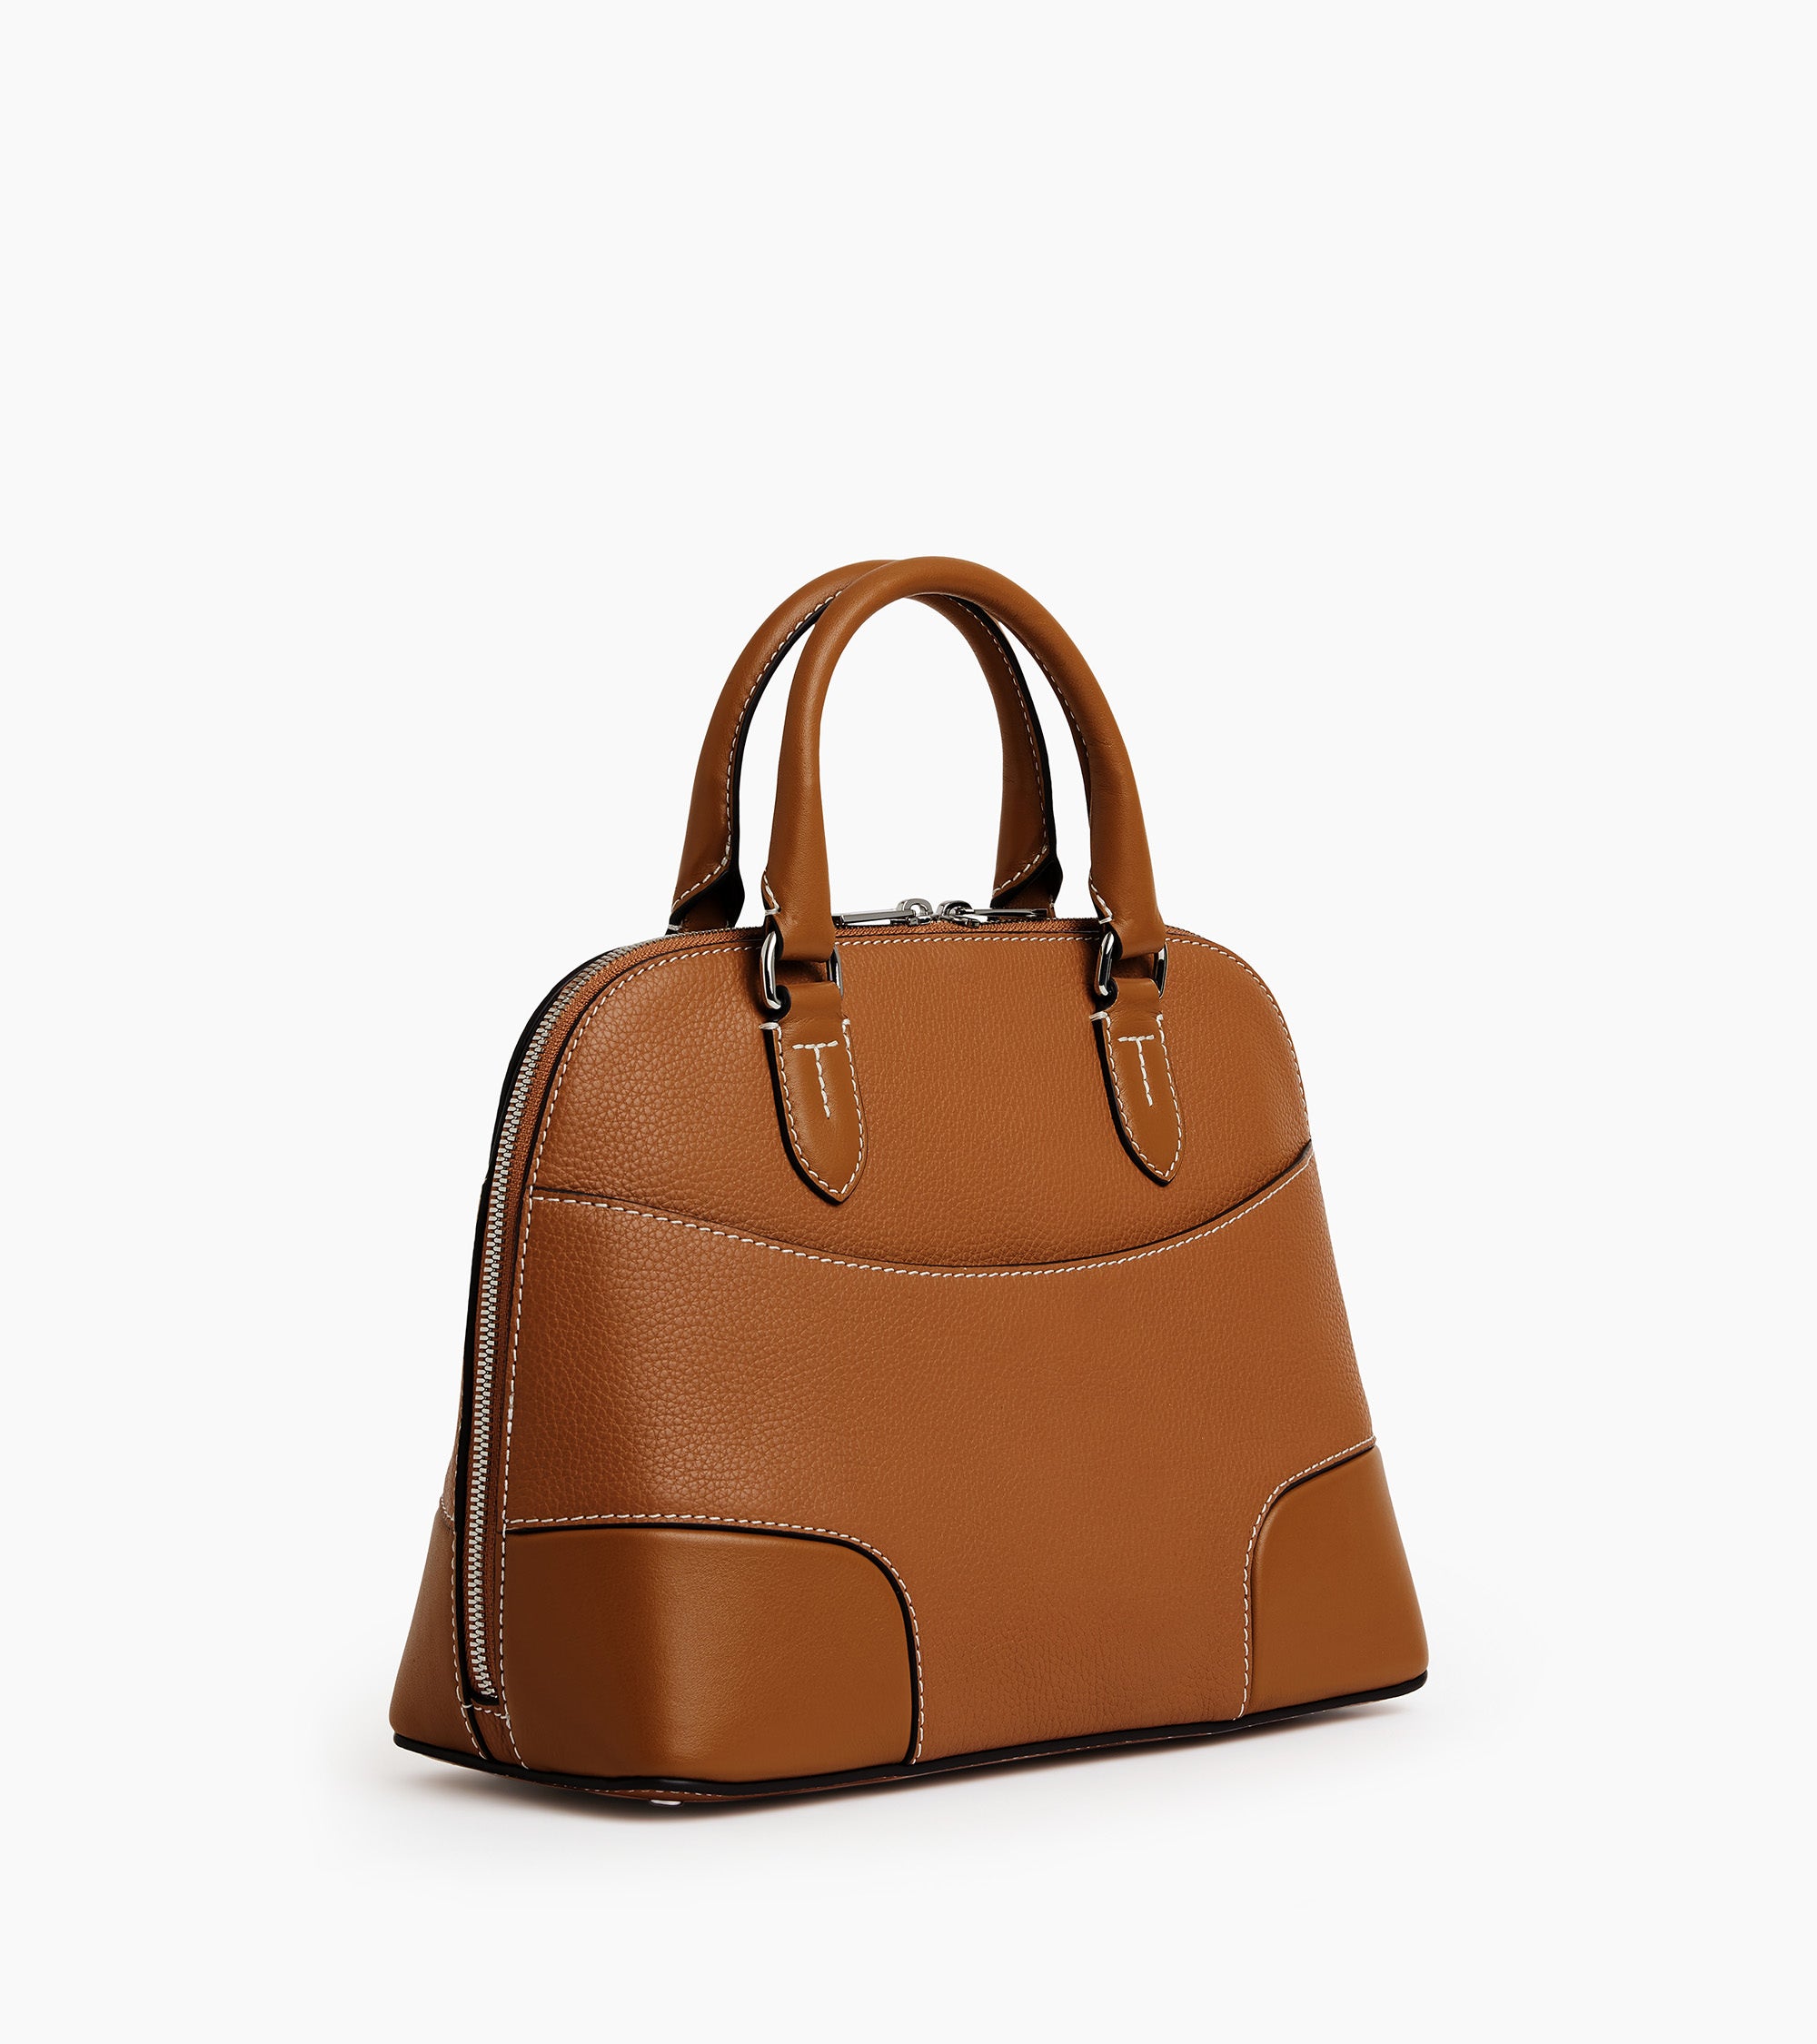 Romy medium handbag in smooth grained leather